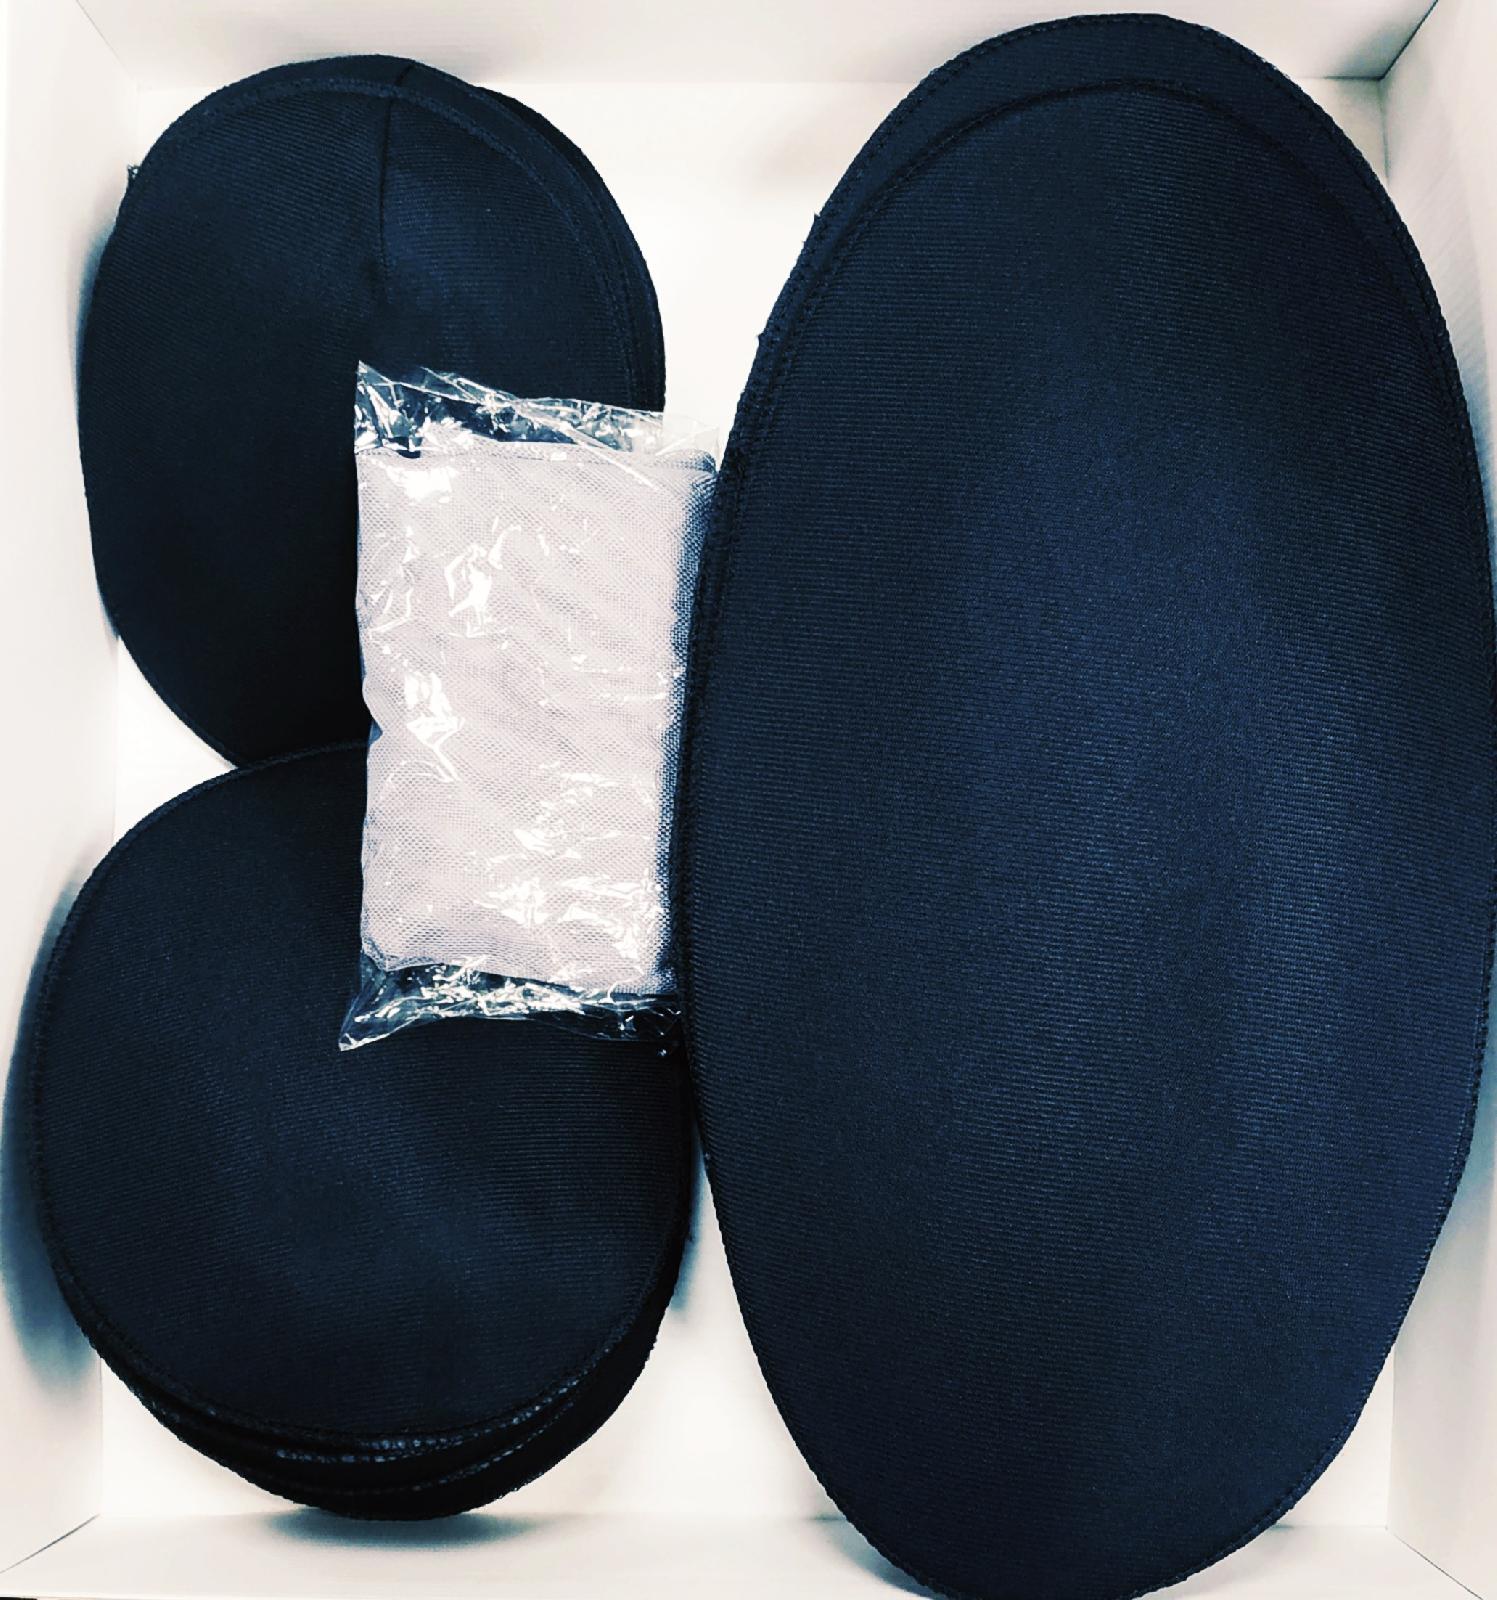 фото - Набор накладок Pro р.52-54 (цв. чёрный) для коррекции фигуры манекена